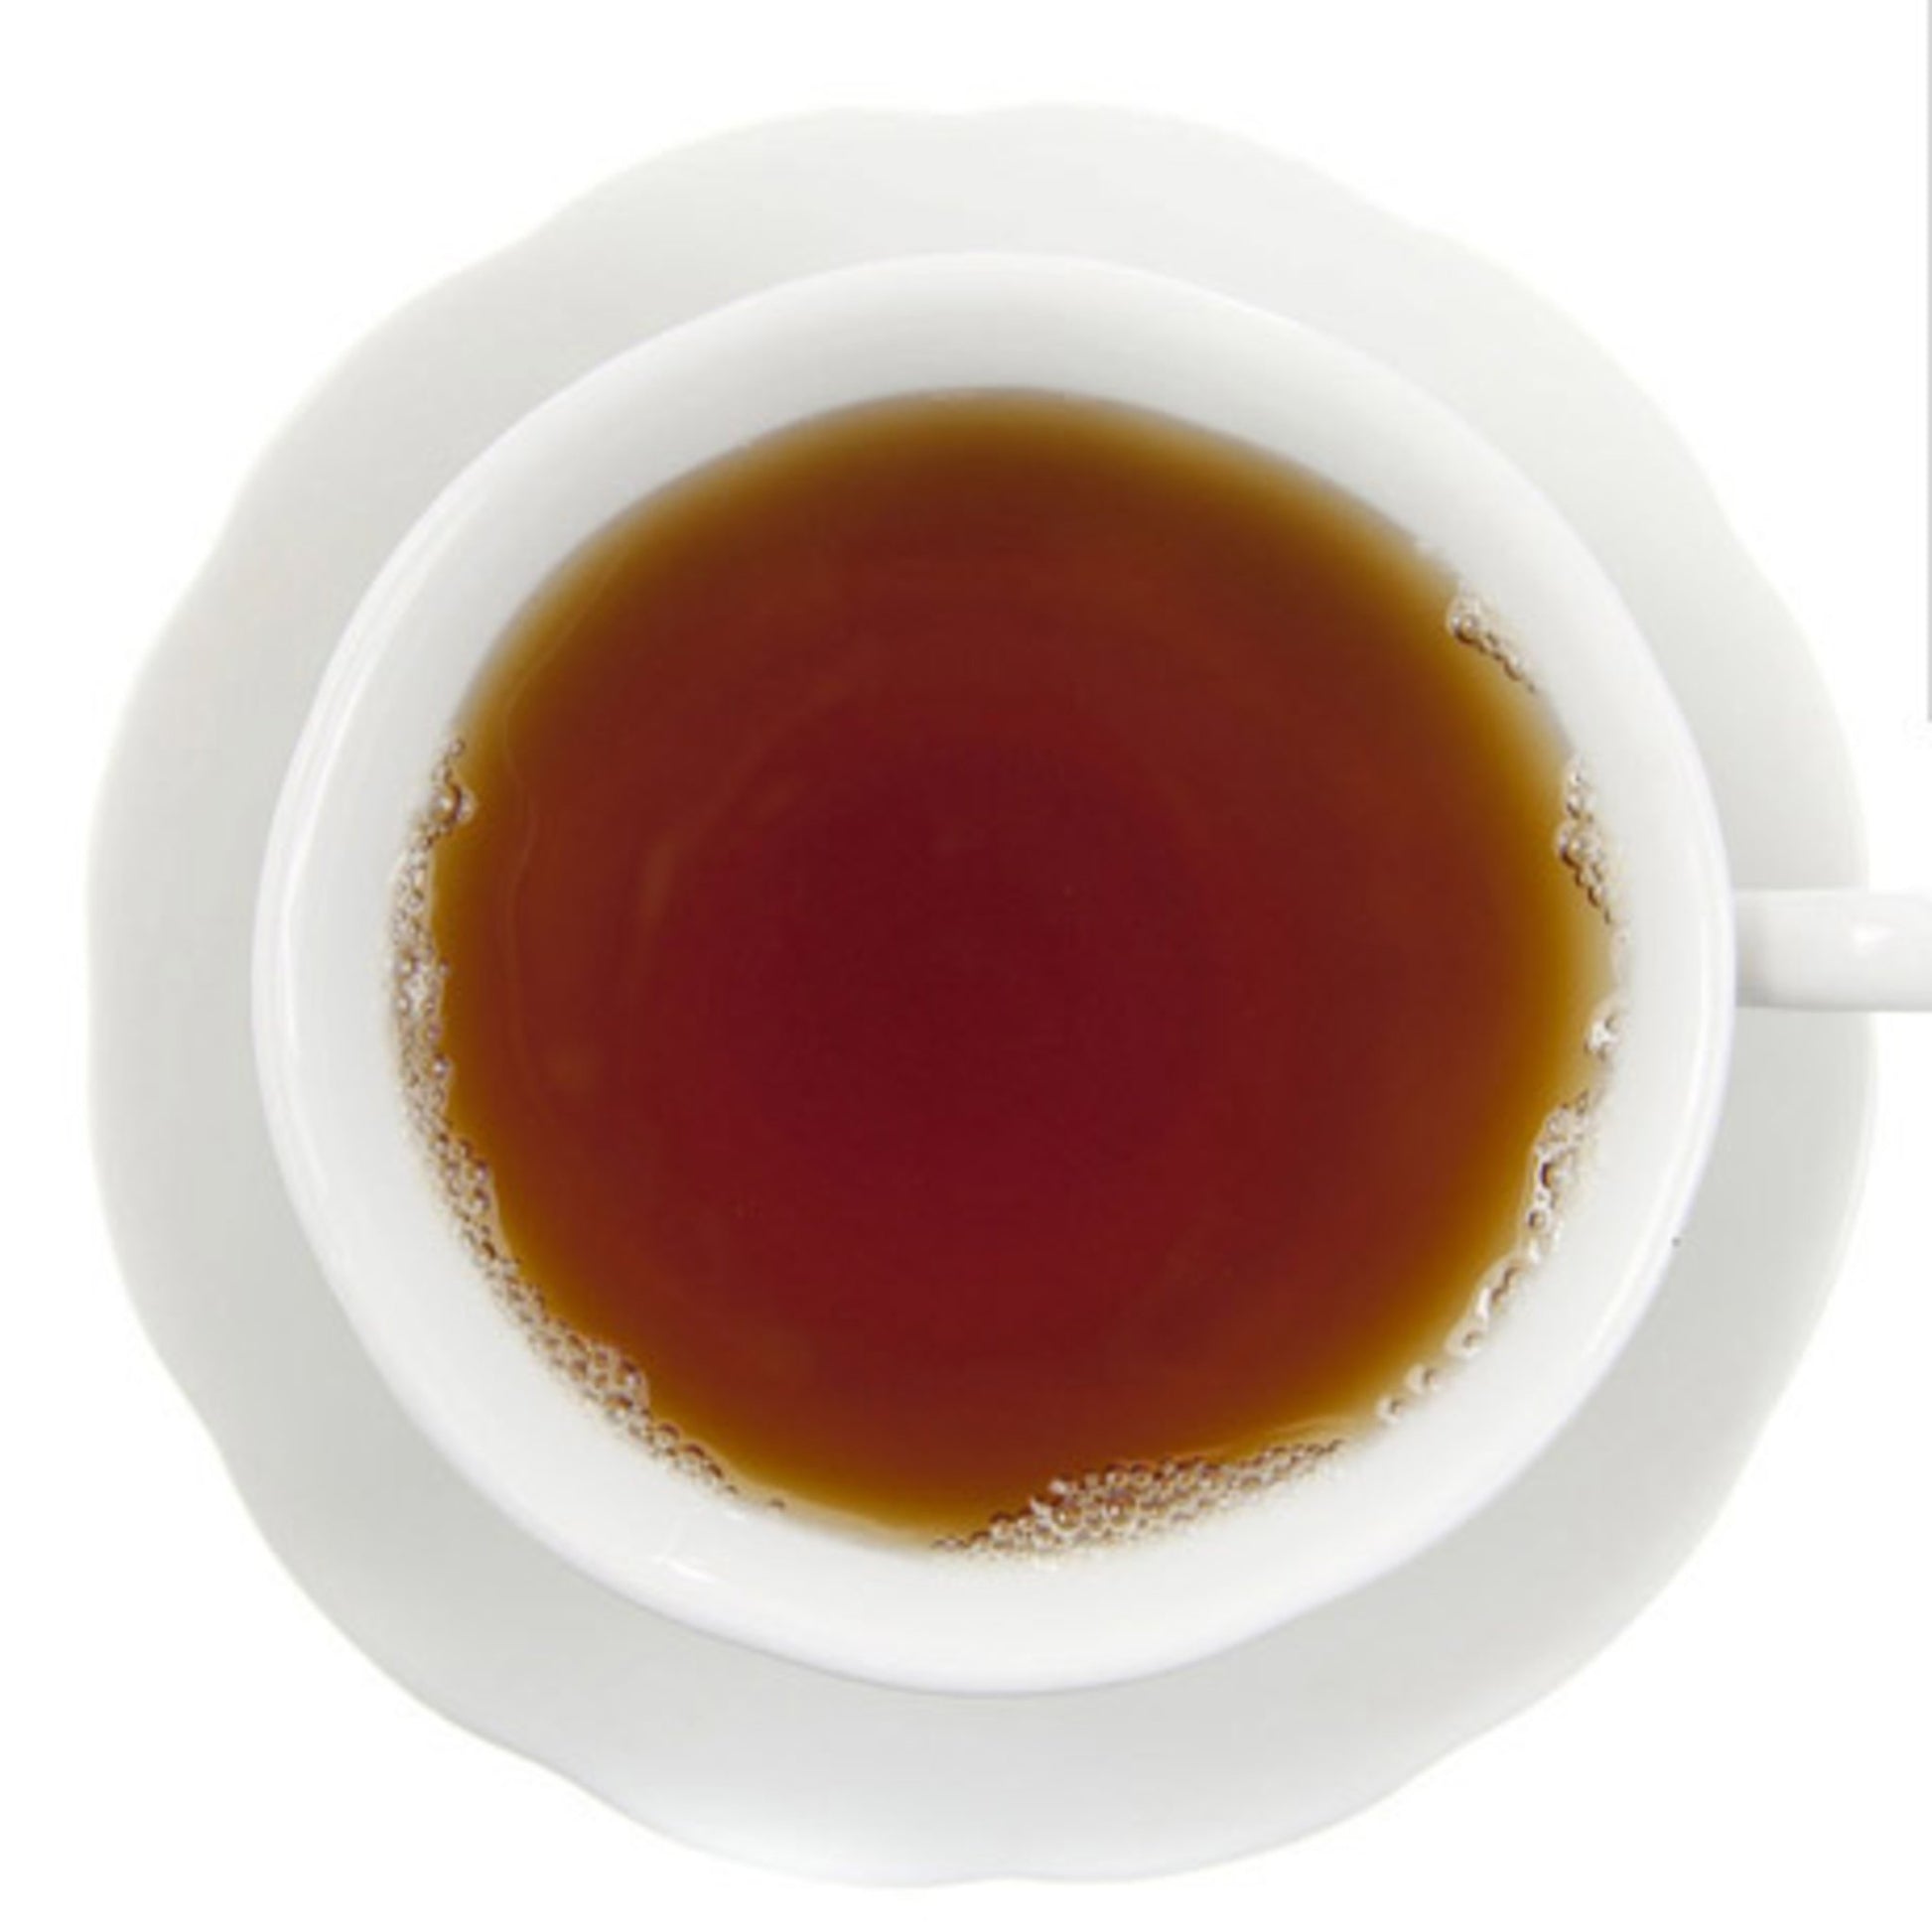 Gratefully Organic Loose-Leaf English Breakfast Black Tea Tea & Infusions The Grateful Tea Co. 